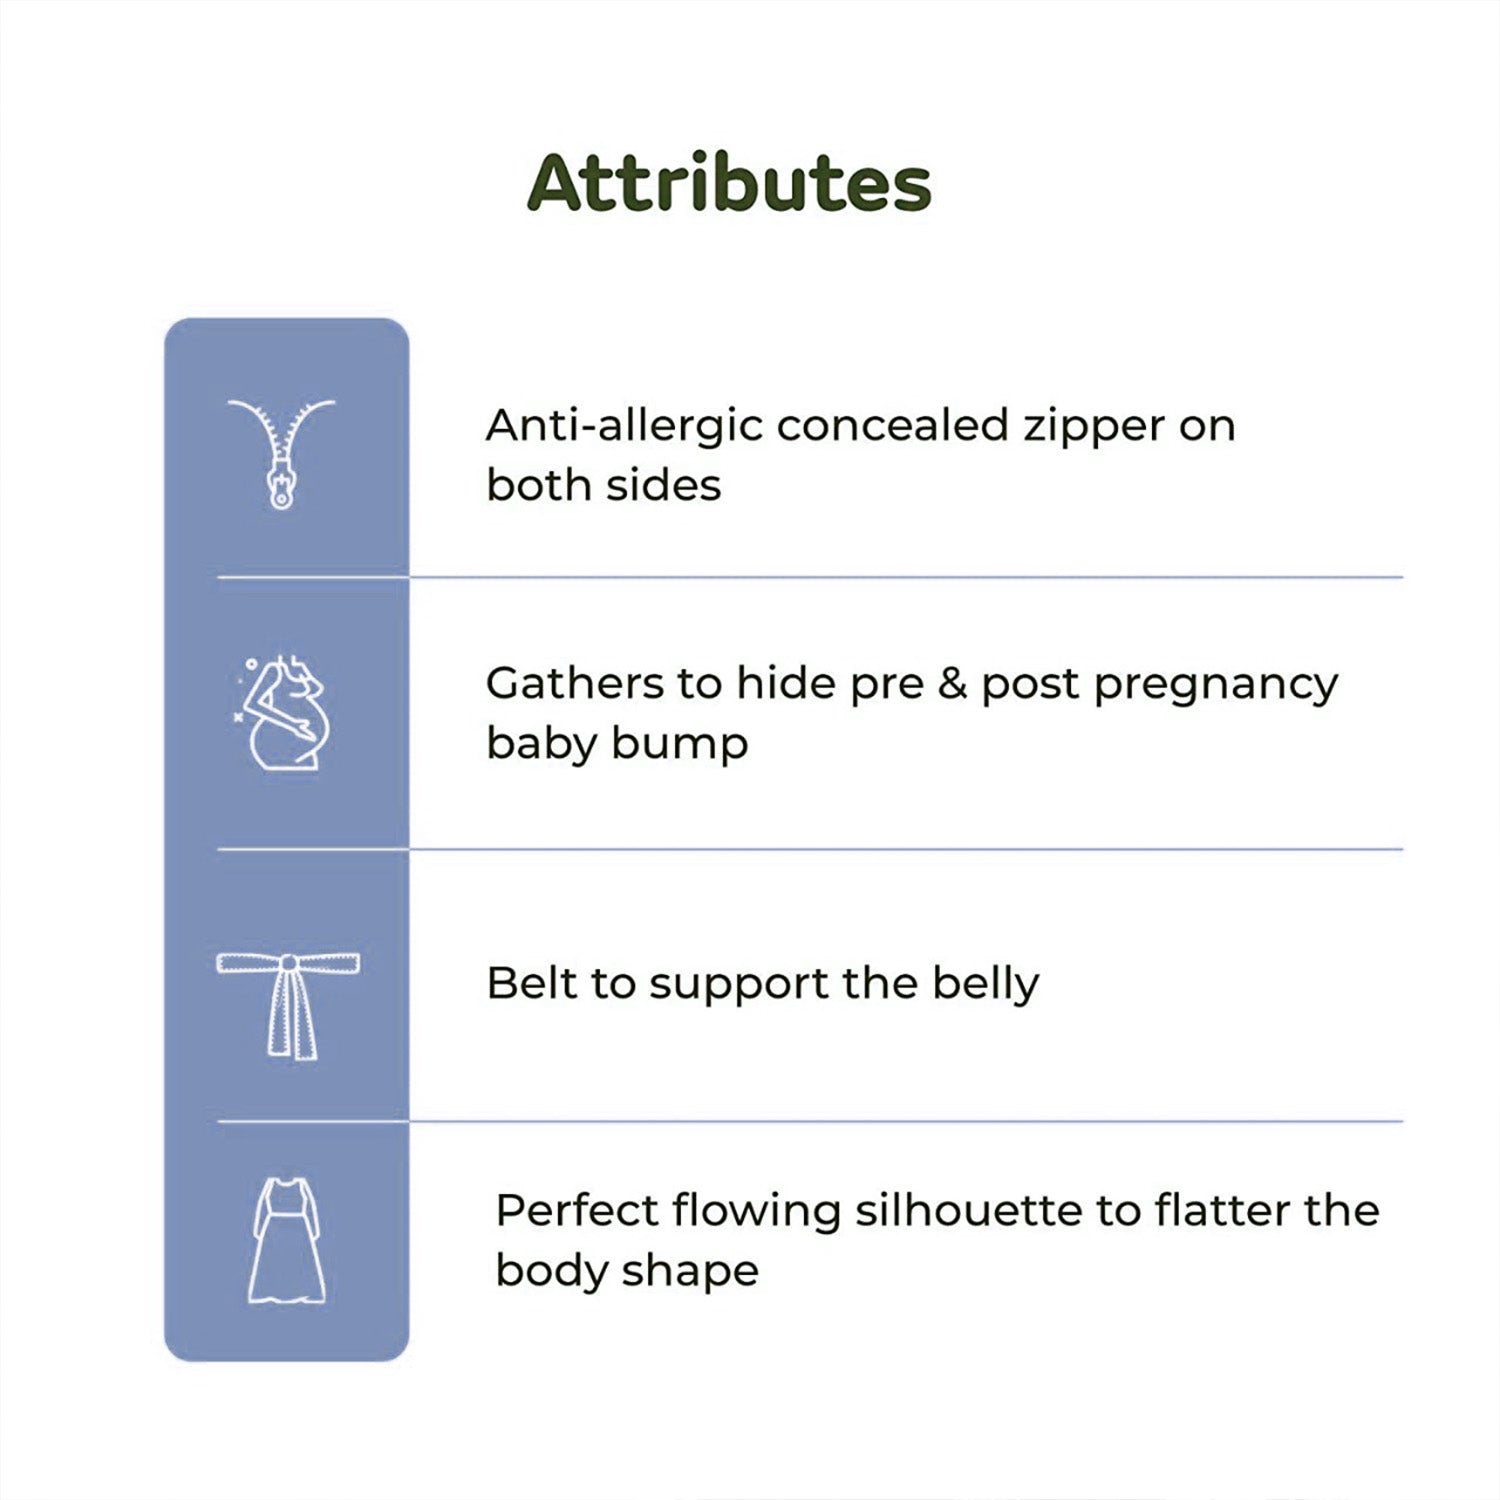 Baby Moo Half Bell Sleeves Comfortable Nursing And Maternity Dress Flower Print - Grey - Baby Moo